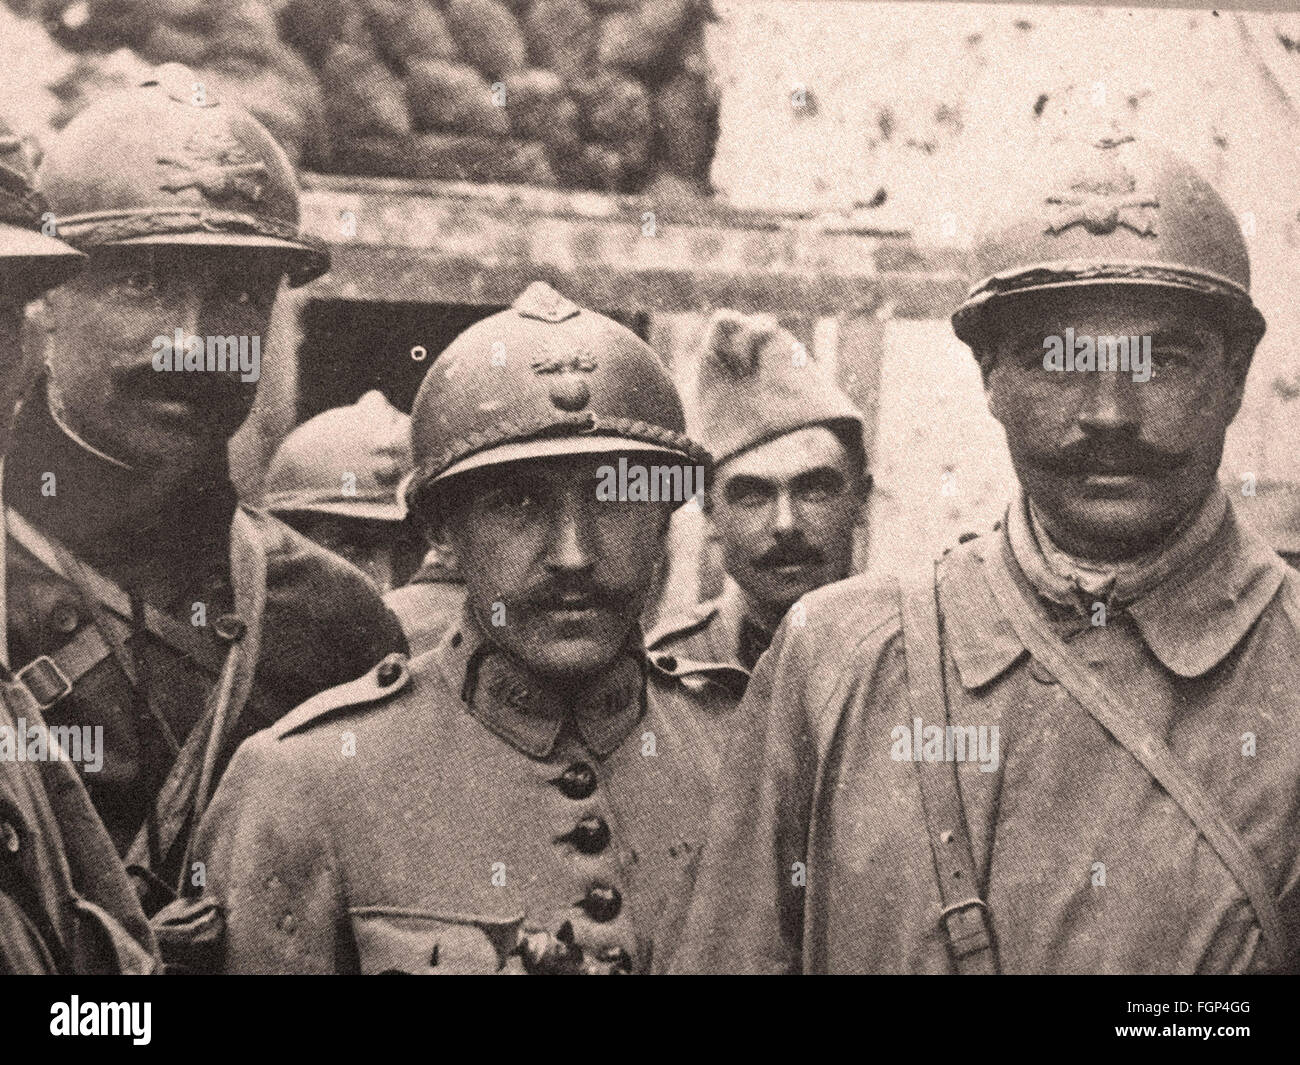 Battle of Verdun 1916 - Portrait of Soldiers Stock Photo